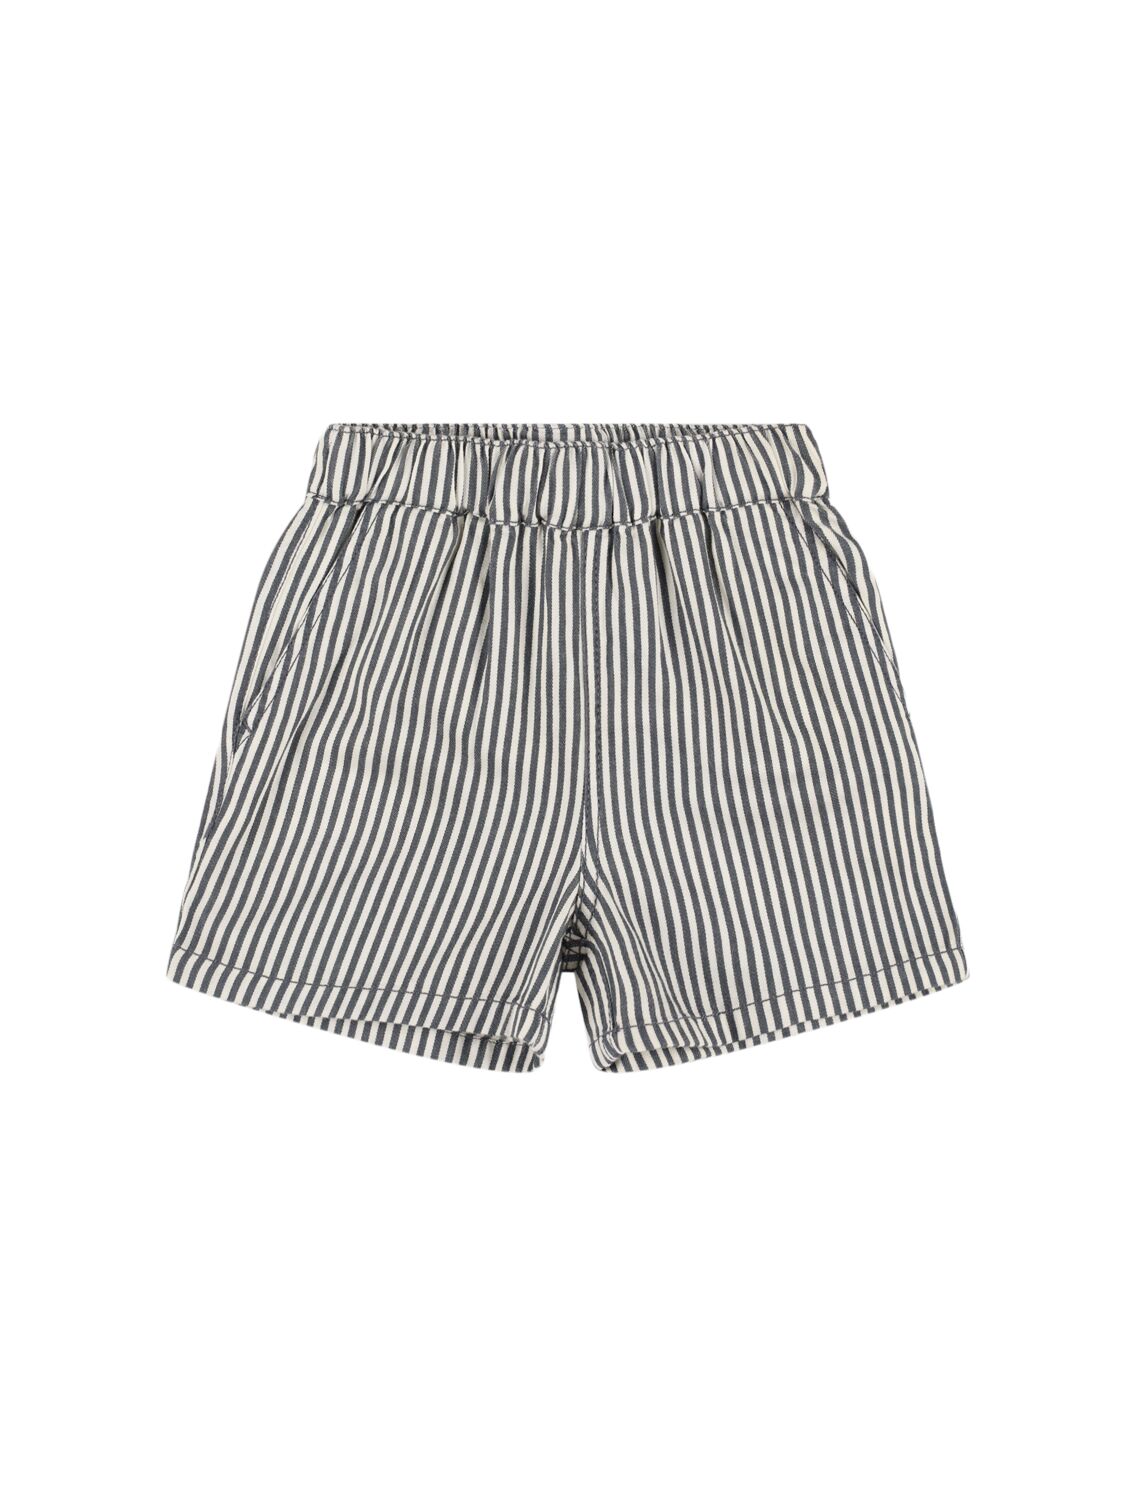 Image of Striped Organic Cotton Shorts